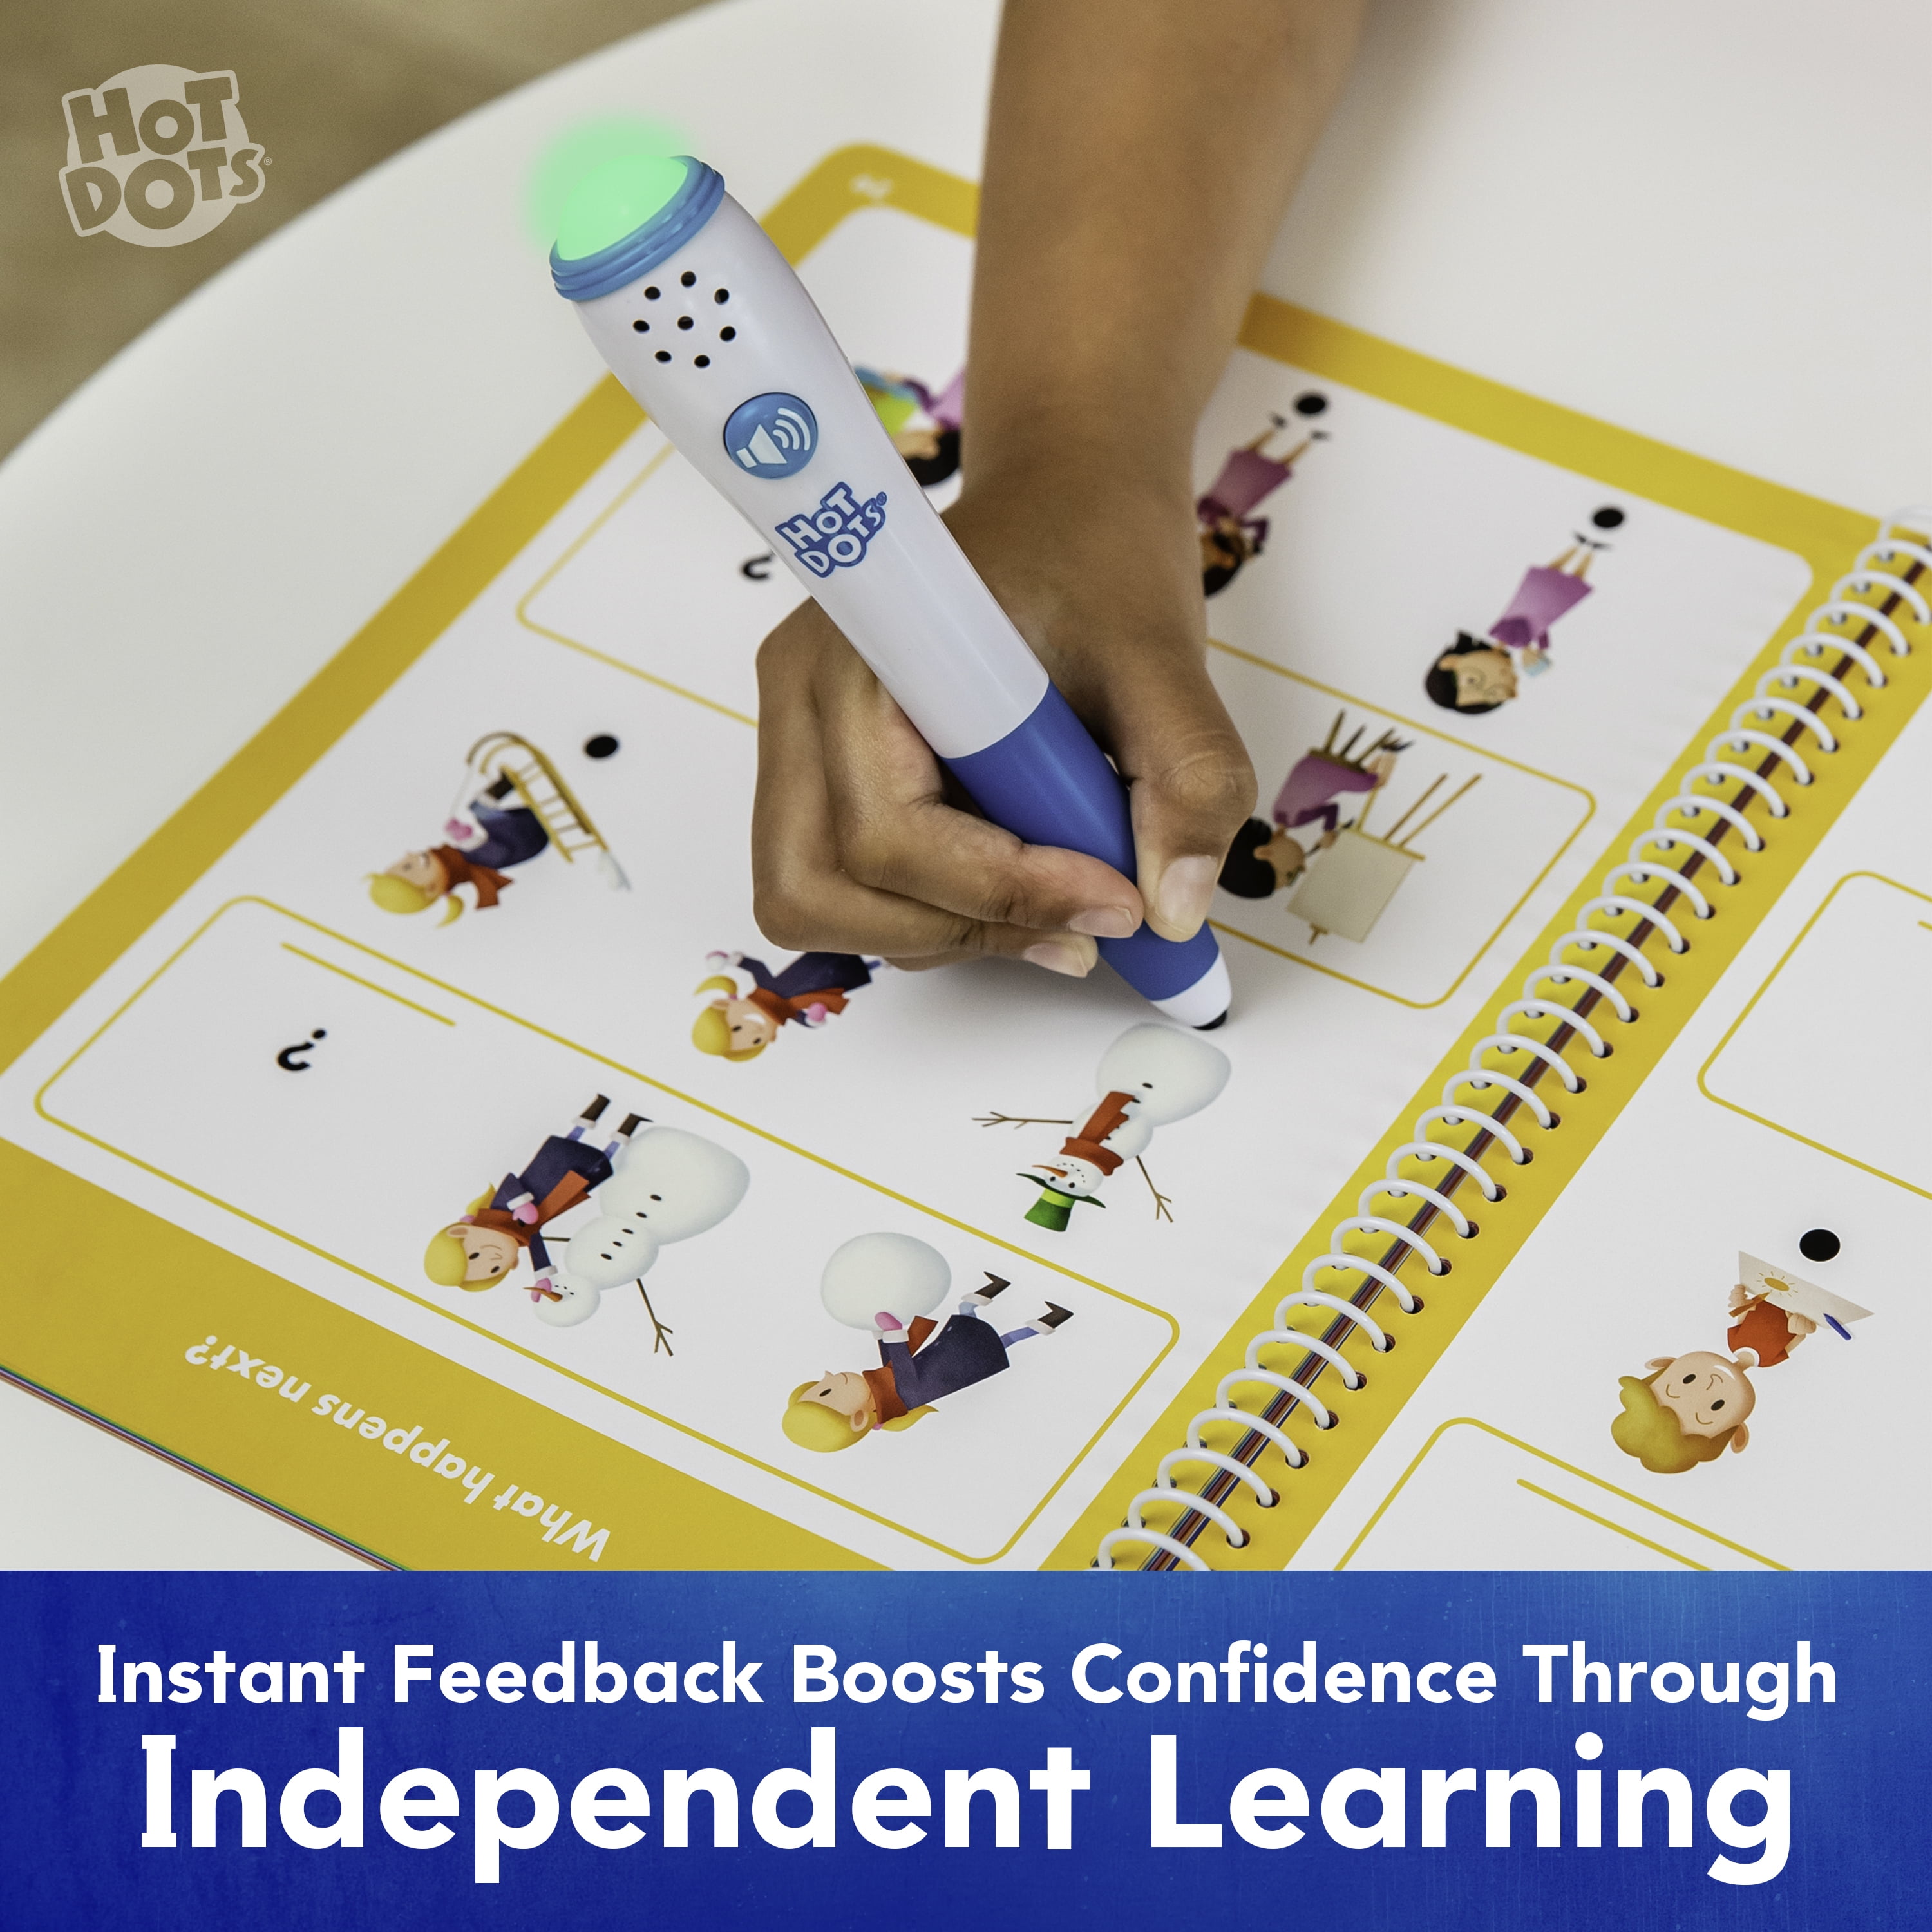 Educational Insights Hot Dots Jr. Let's Master Pre-K Reading Set &  Interactive Pen